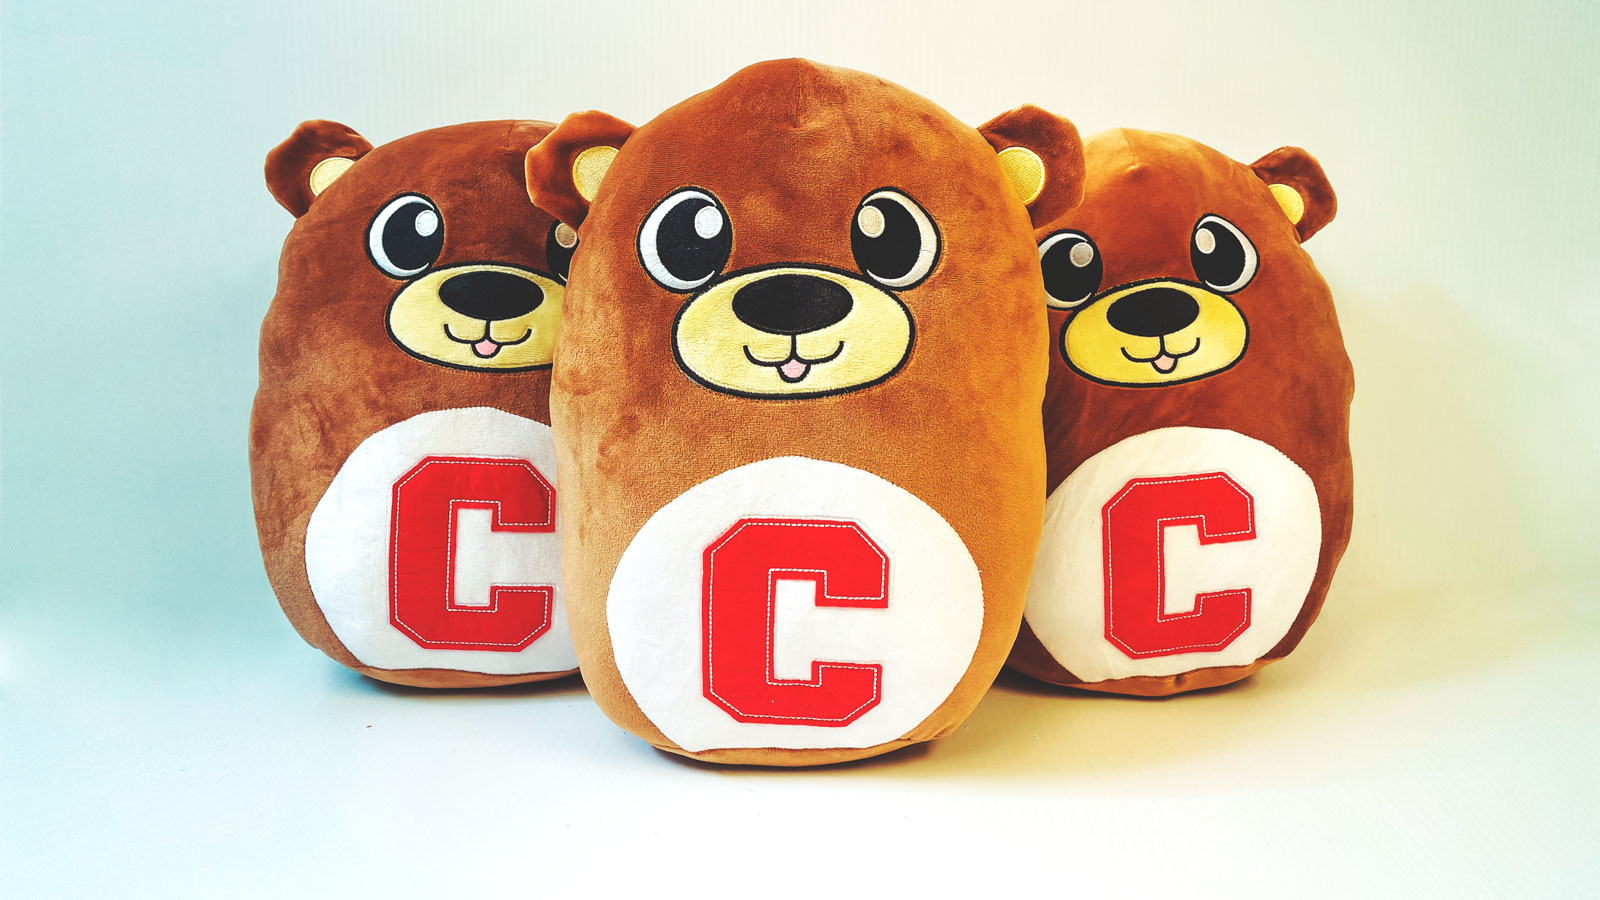 Three Cornell squishy bear pillows